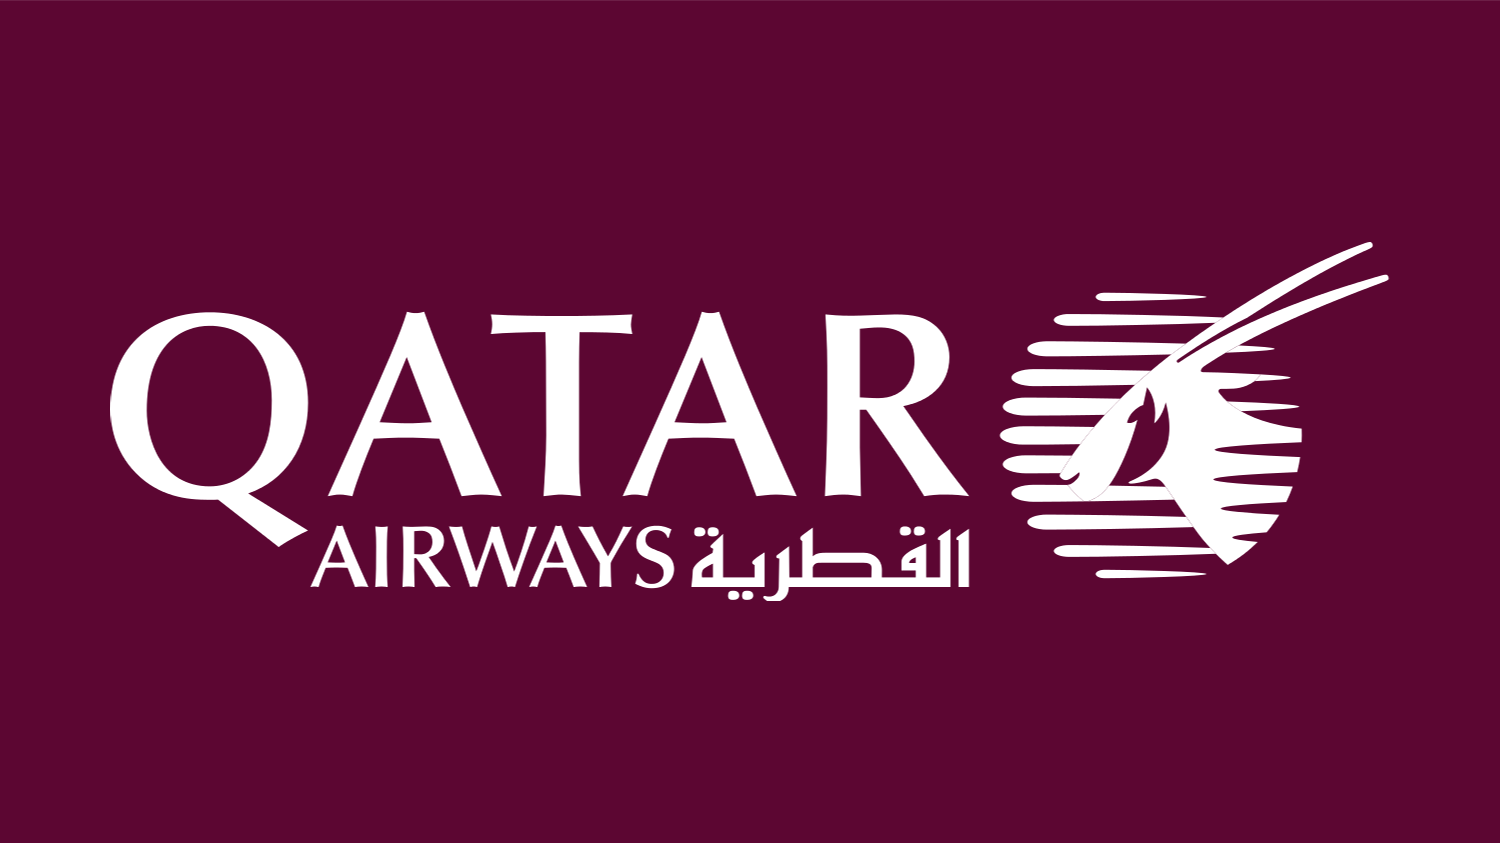 Qatar Logo - Qatar Airways logo. الخطوط الجويةدولة قطر